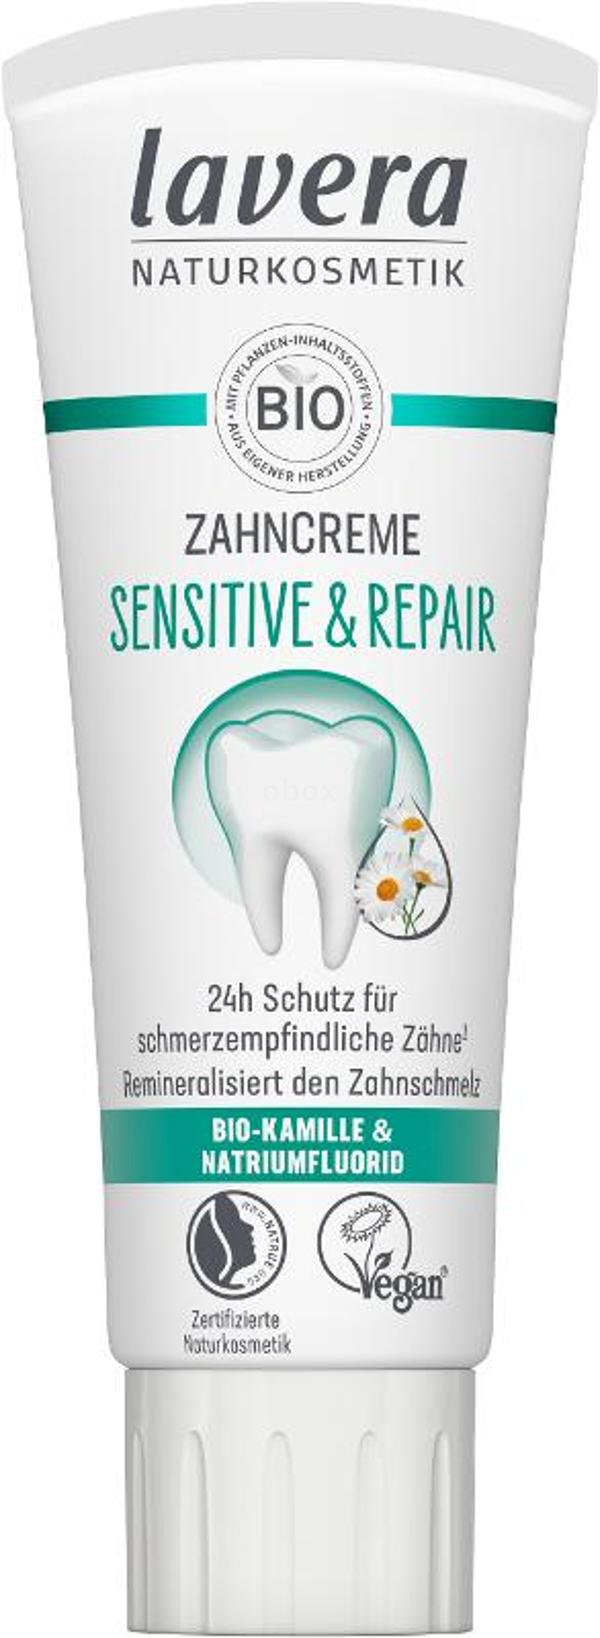 Produktfoto zu Basis sensitiv & repair Zahncreme, 75 ml